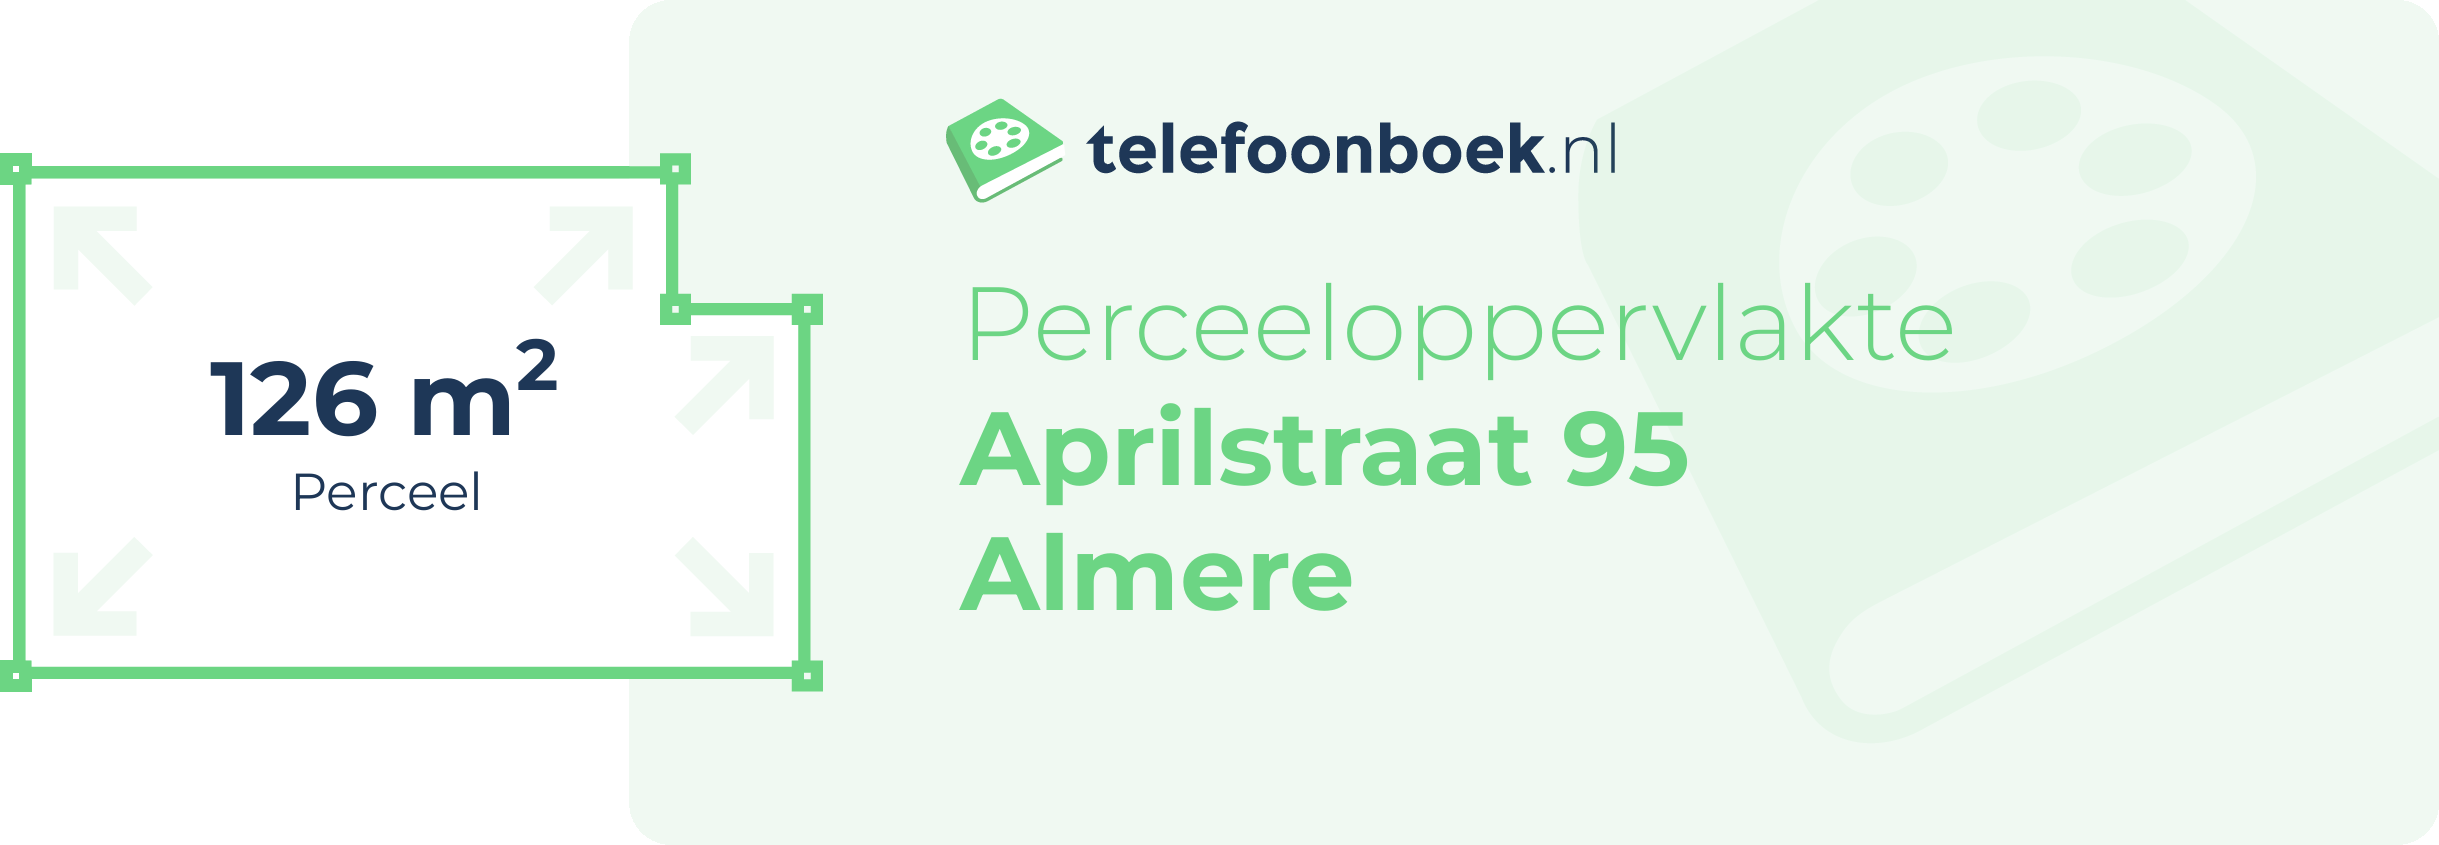 Perceeloppervlakte Aprilstraat 95 Almere